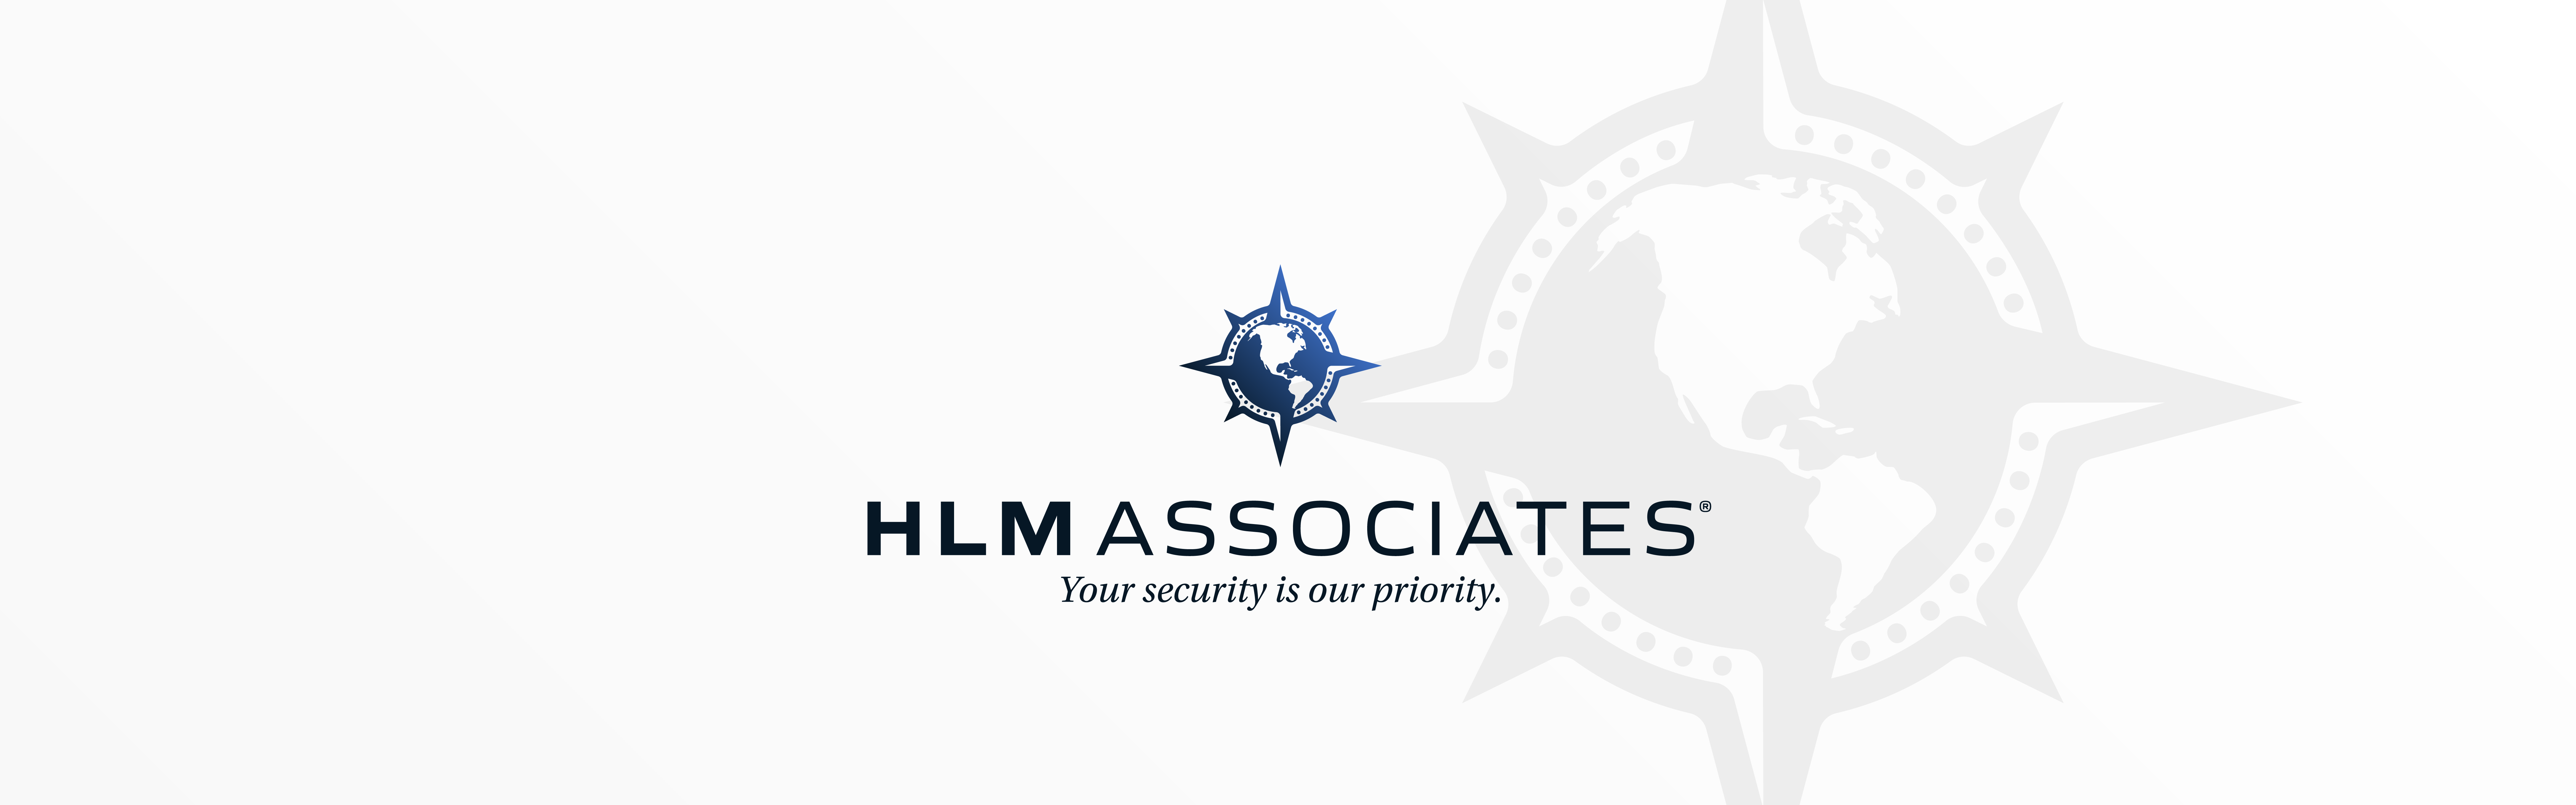 HLM Associates white logo design